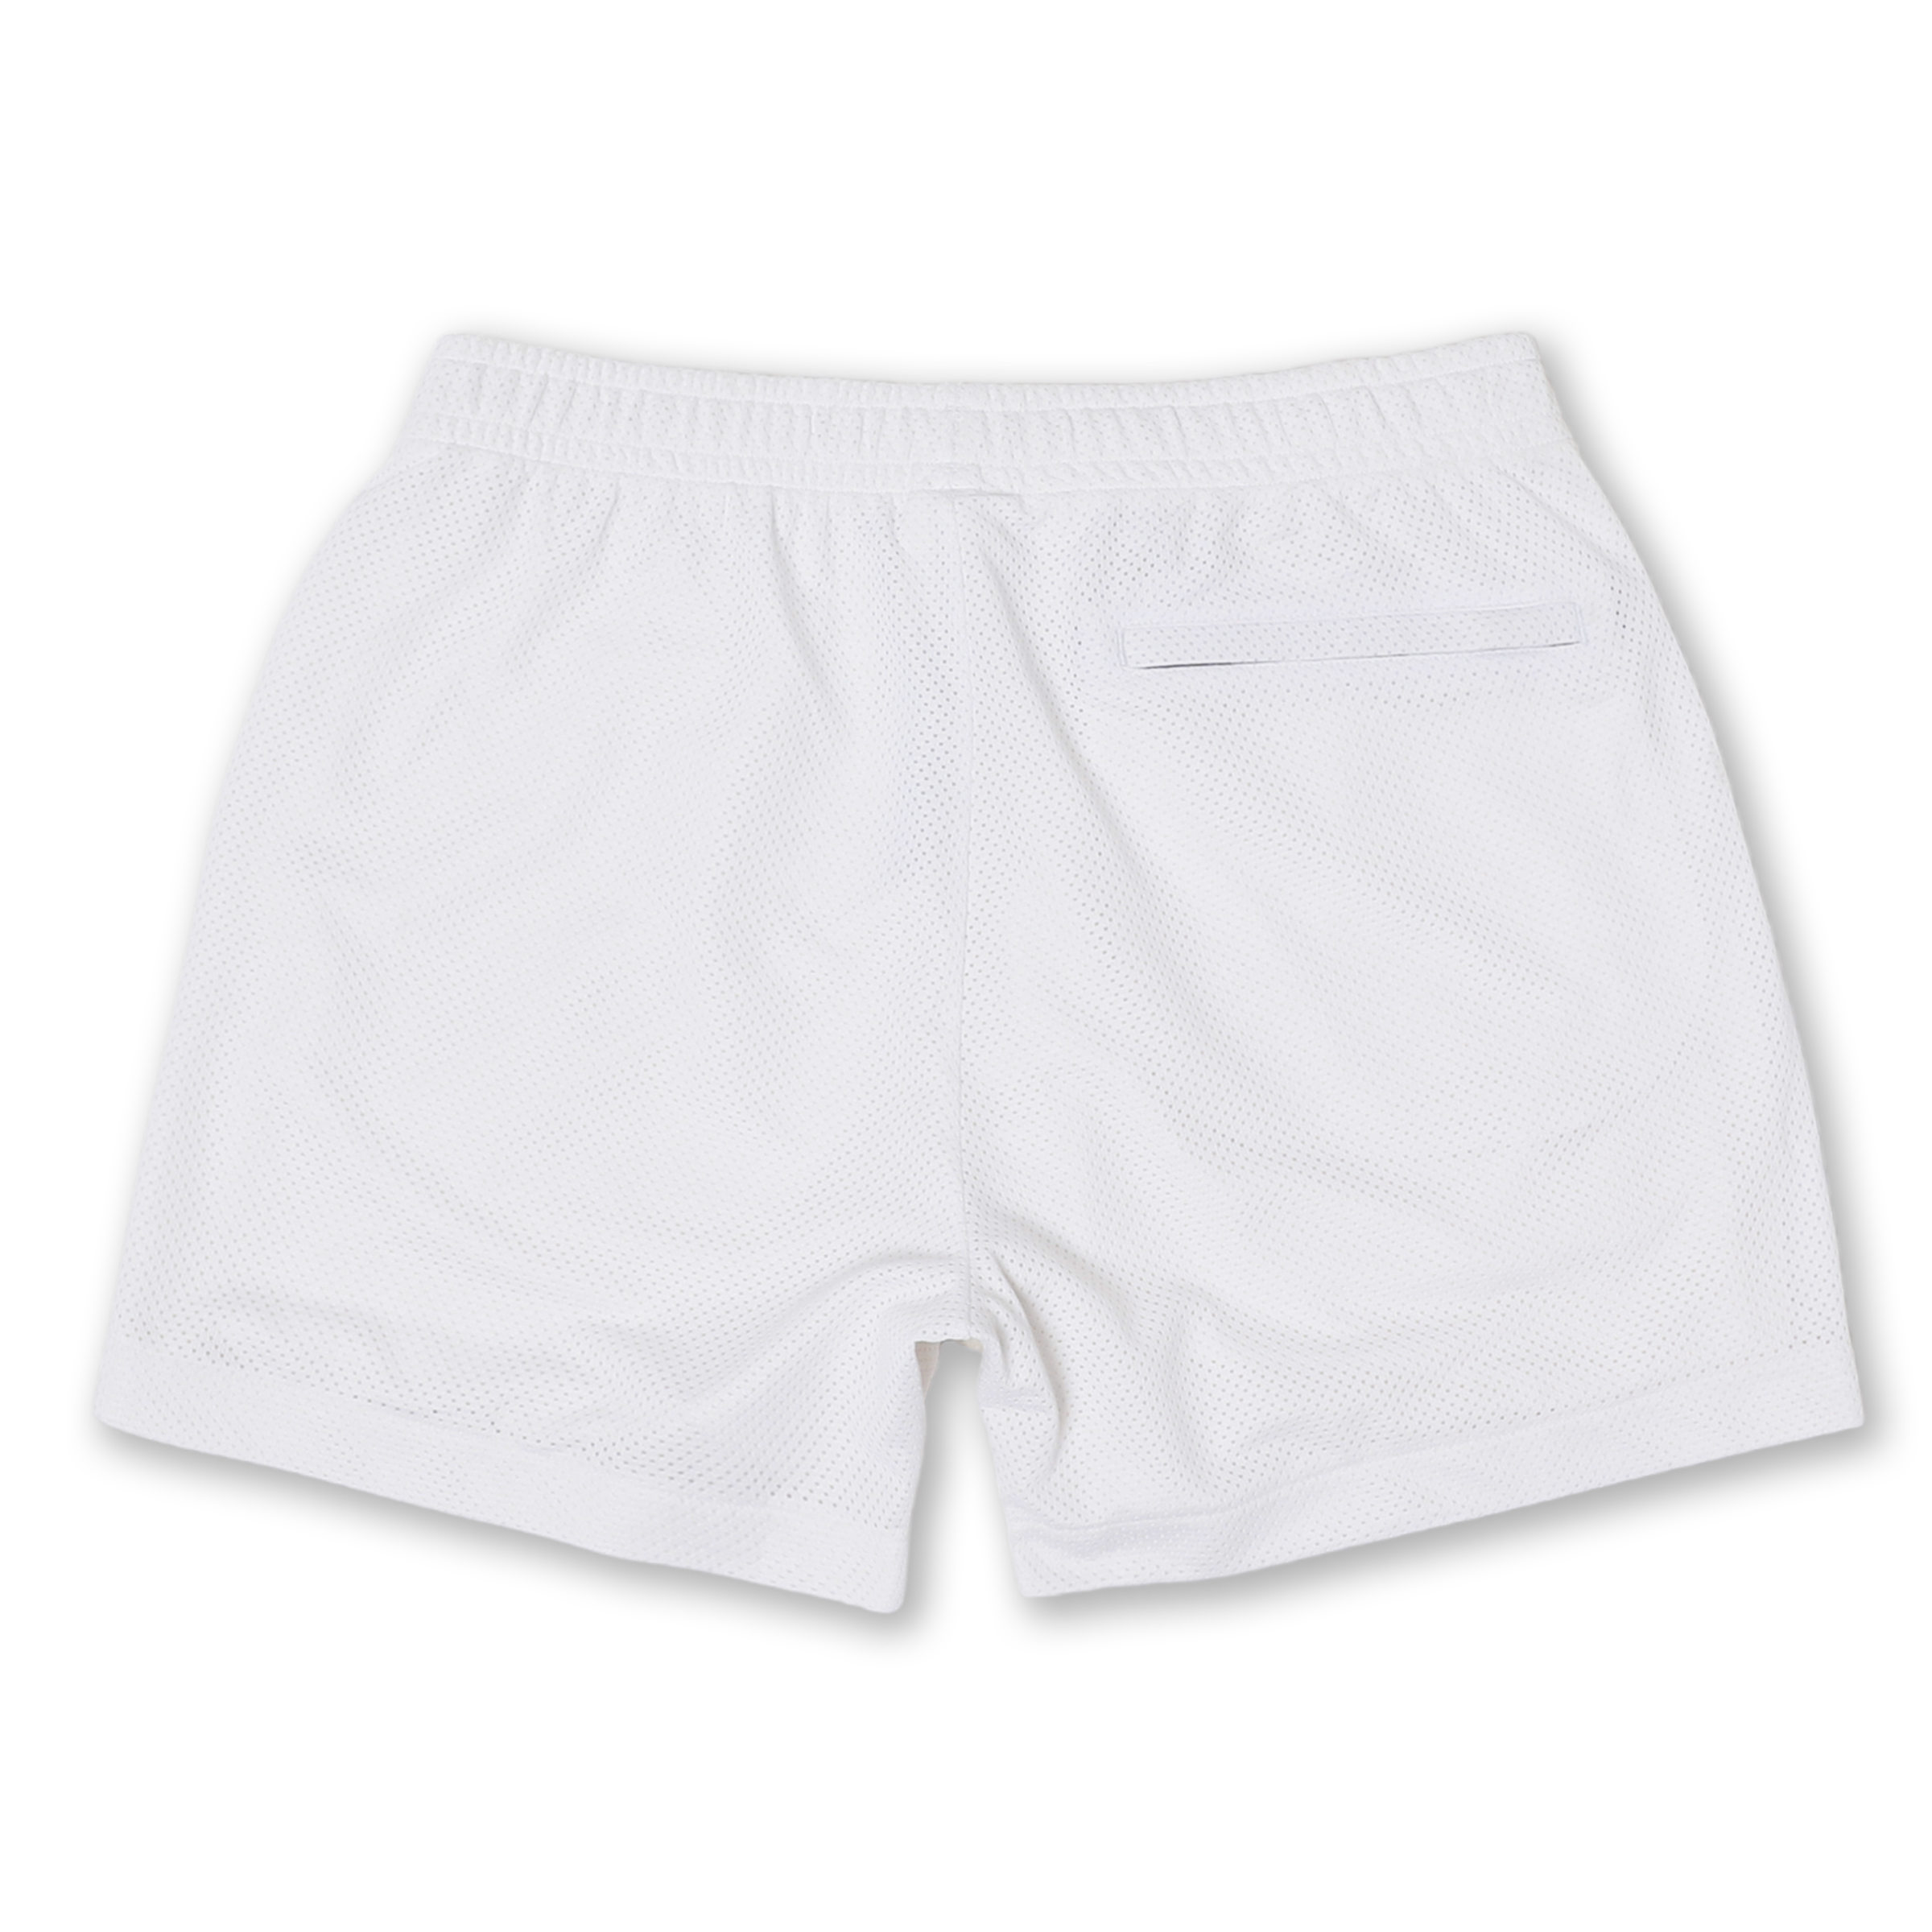 Mesh Short 5.5" White back with elastic waistband and back right hidden zipper pocket